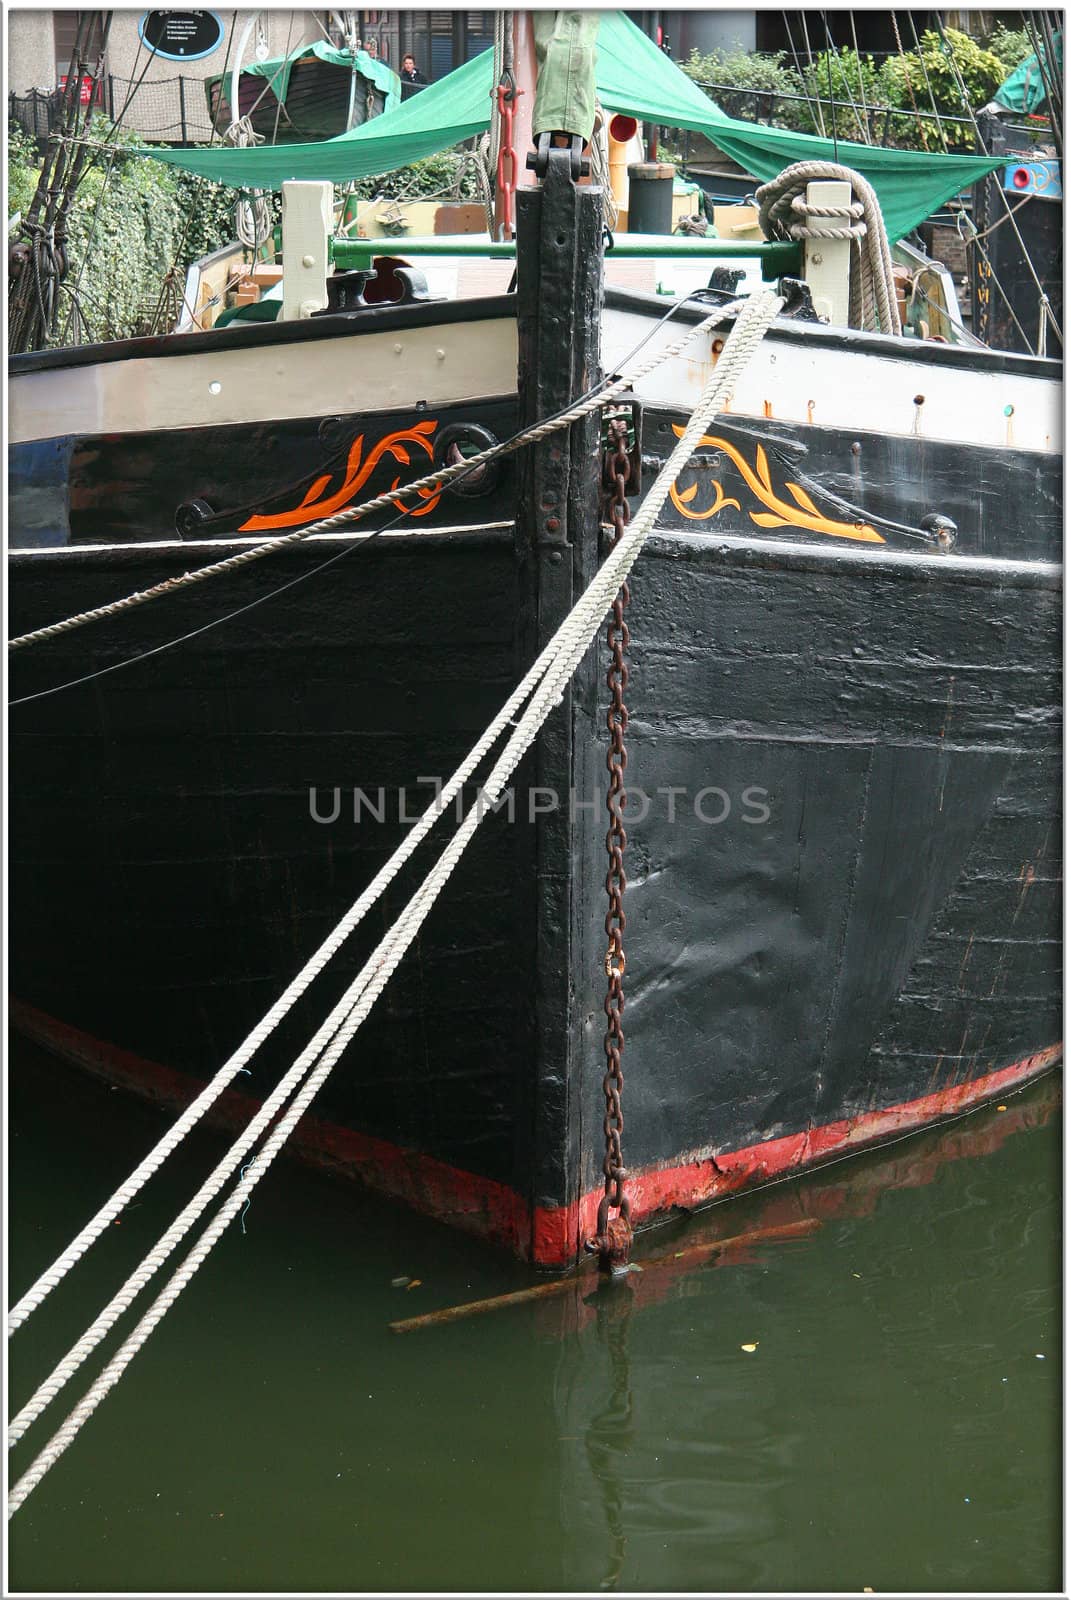 Barge by Imagecom